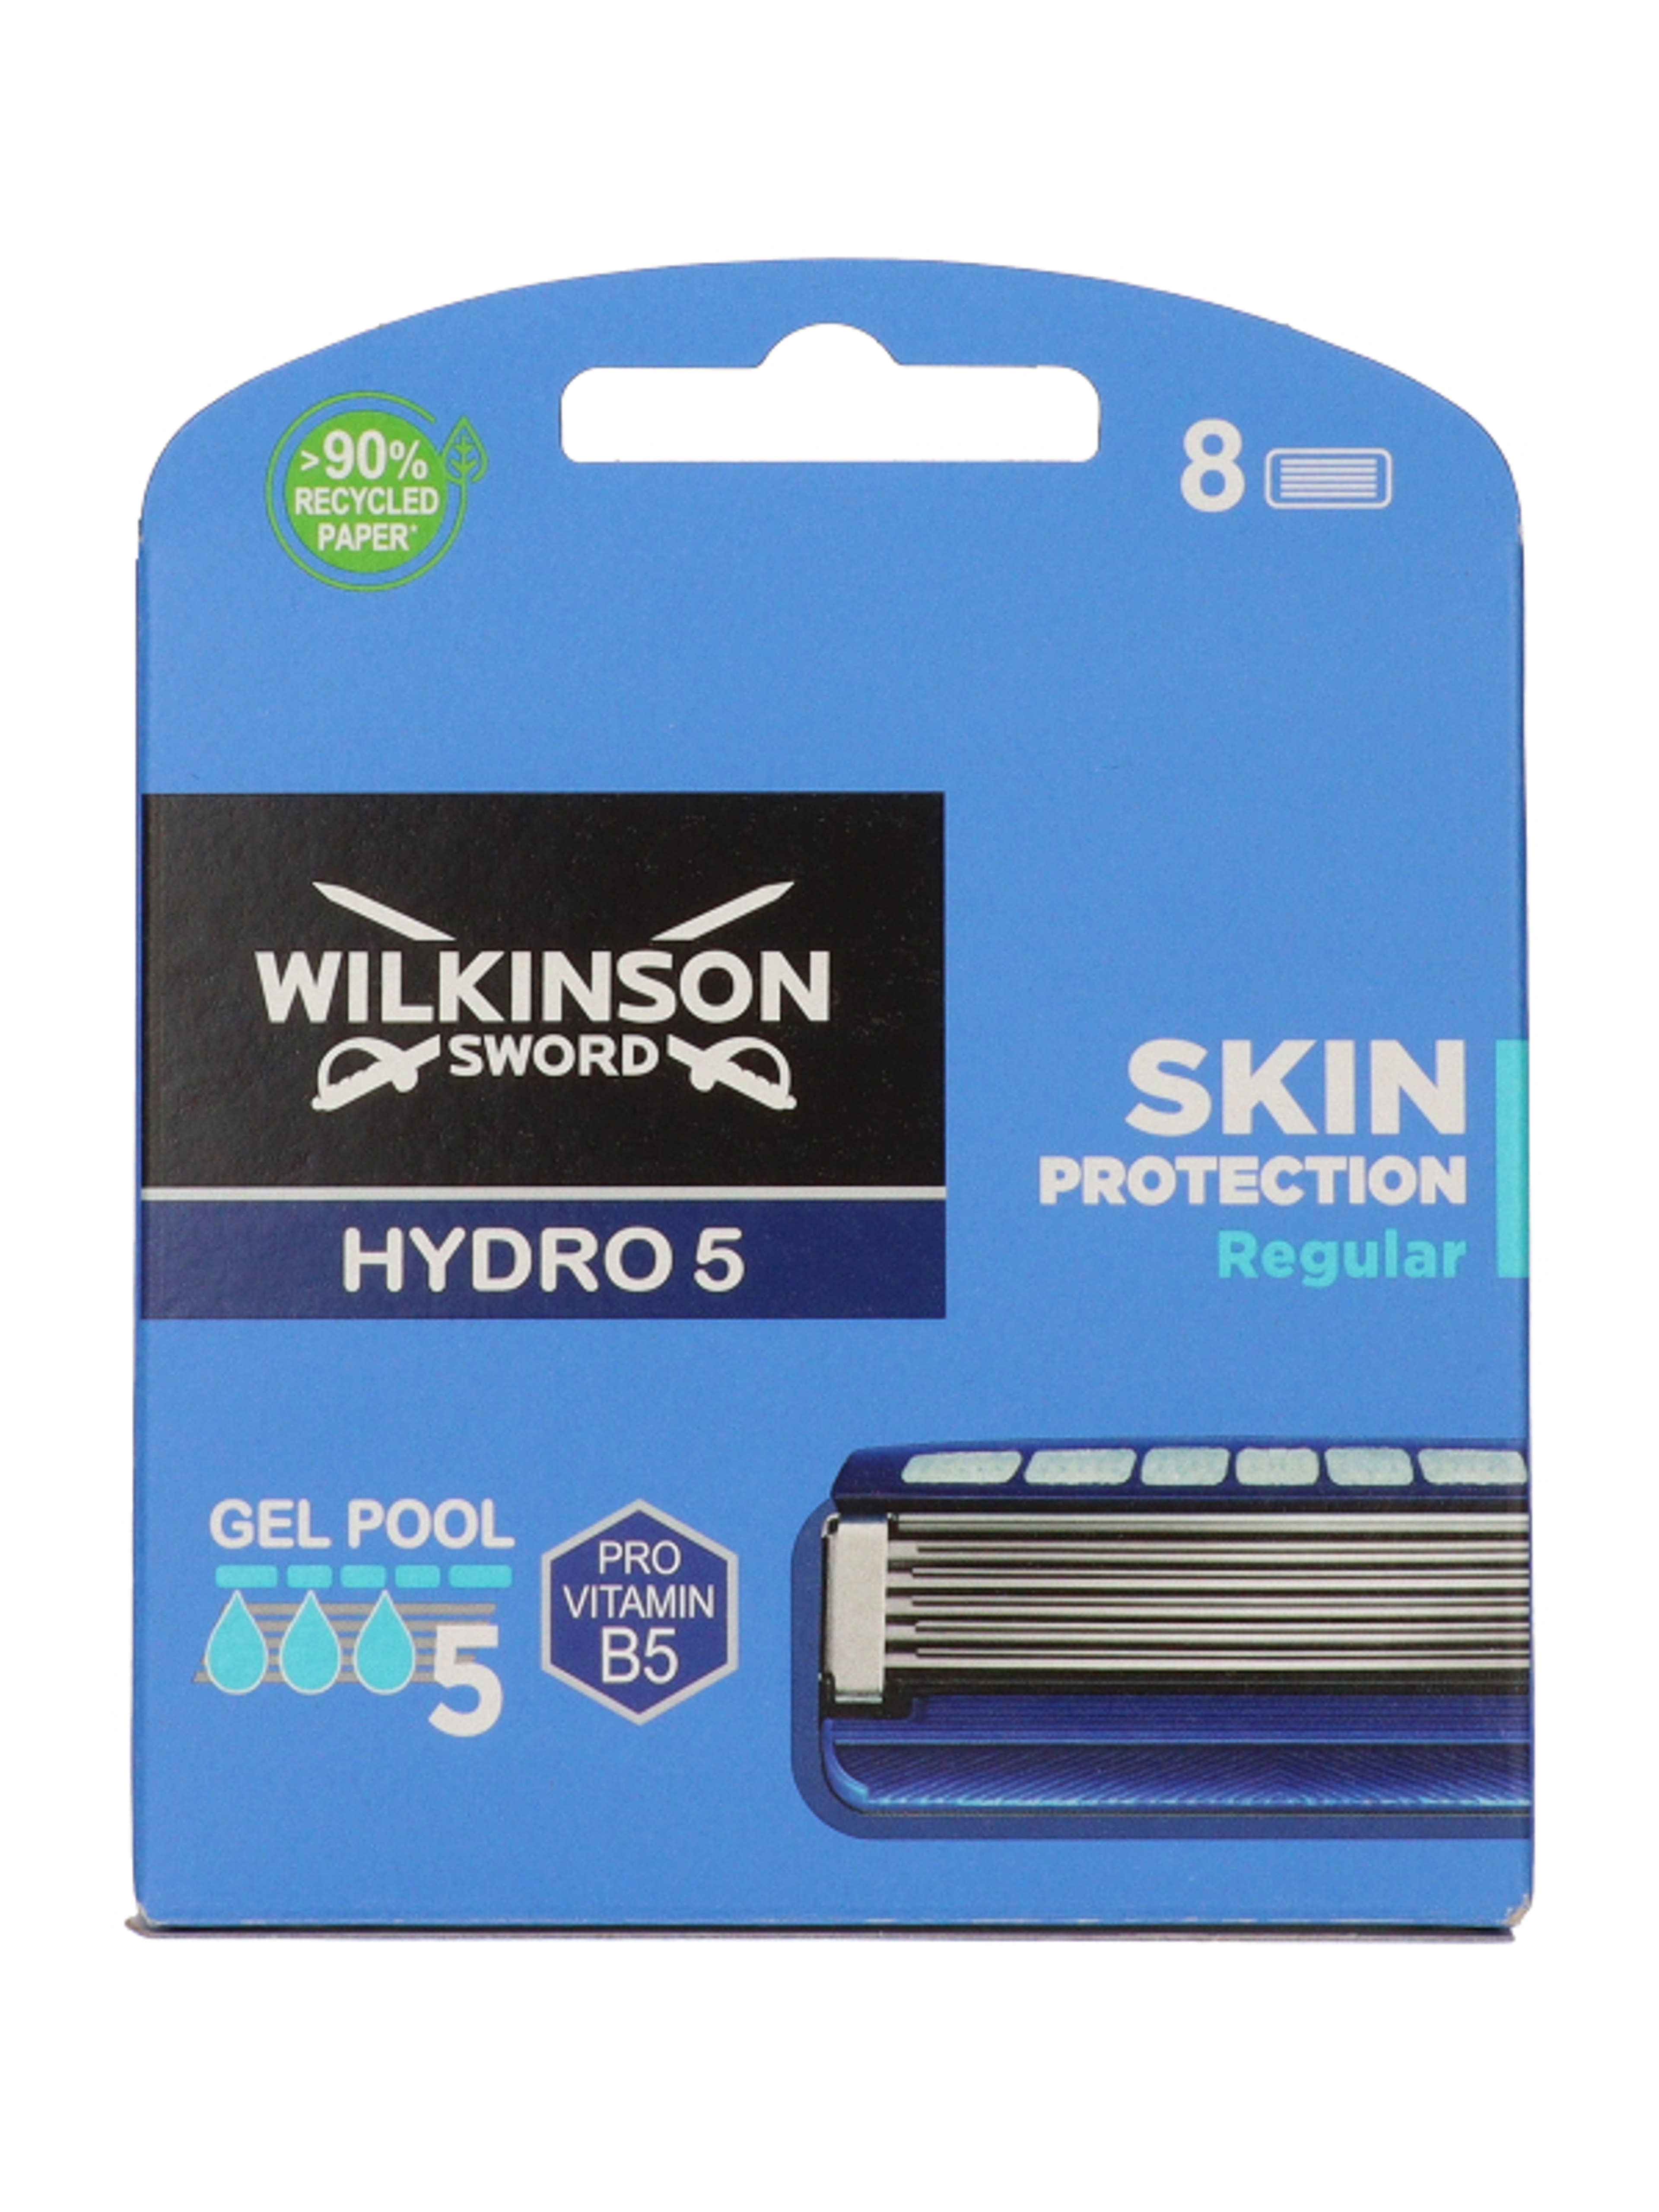 Wilkinson Sword Hydro 5 Skin Protection borotvapenge 5 pengés - 8 db